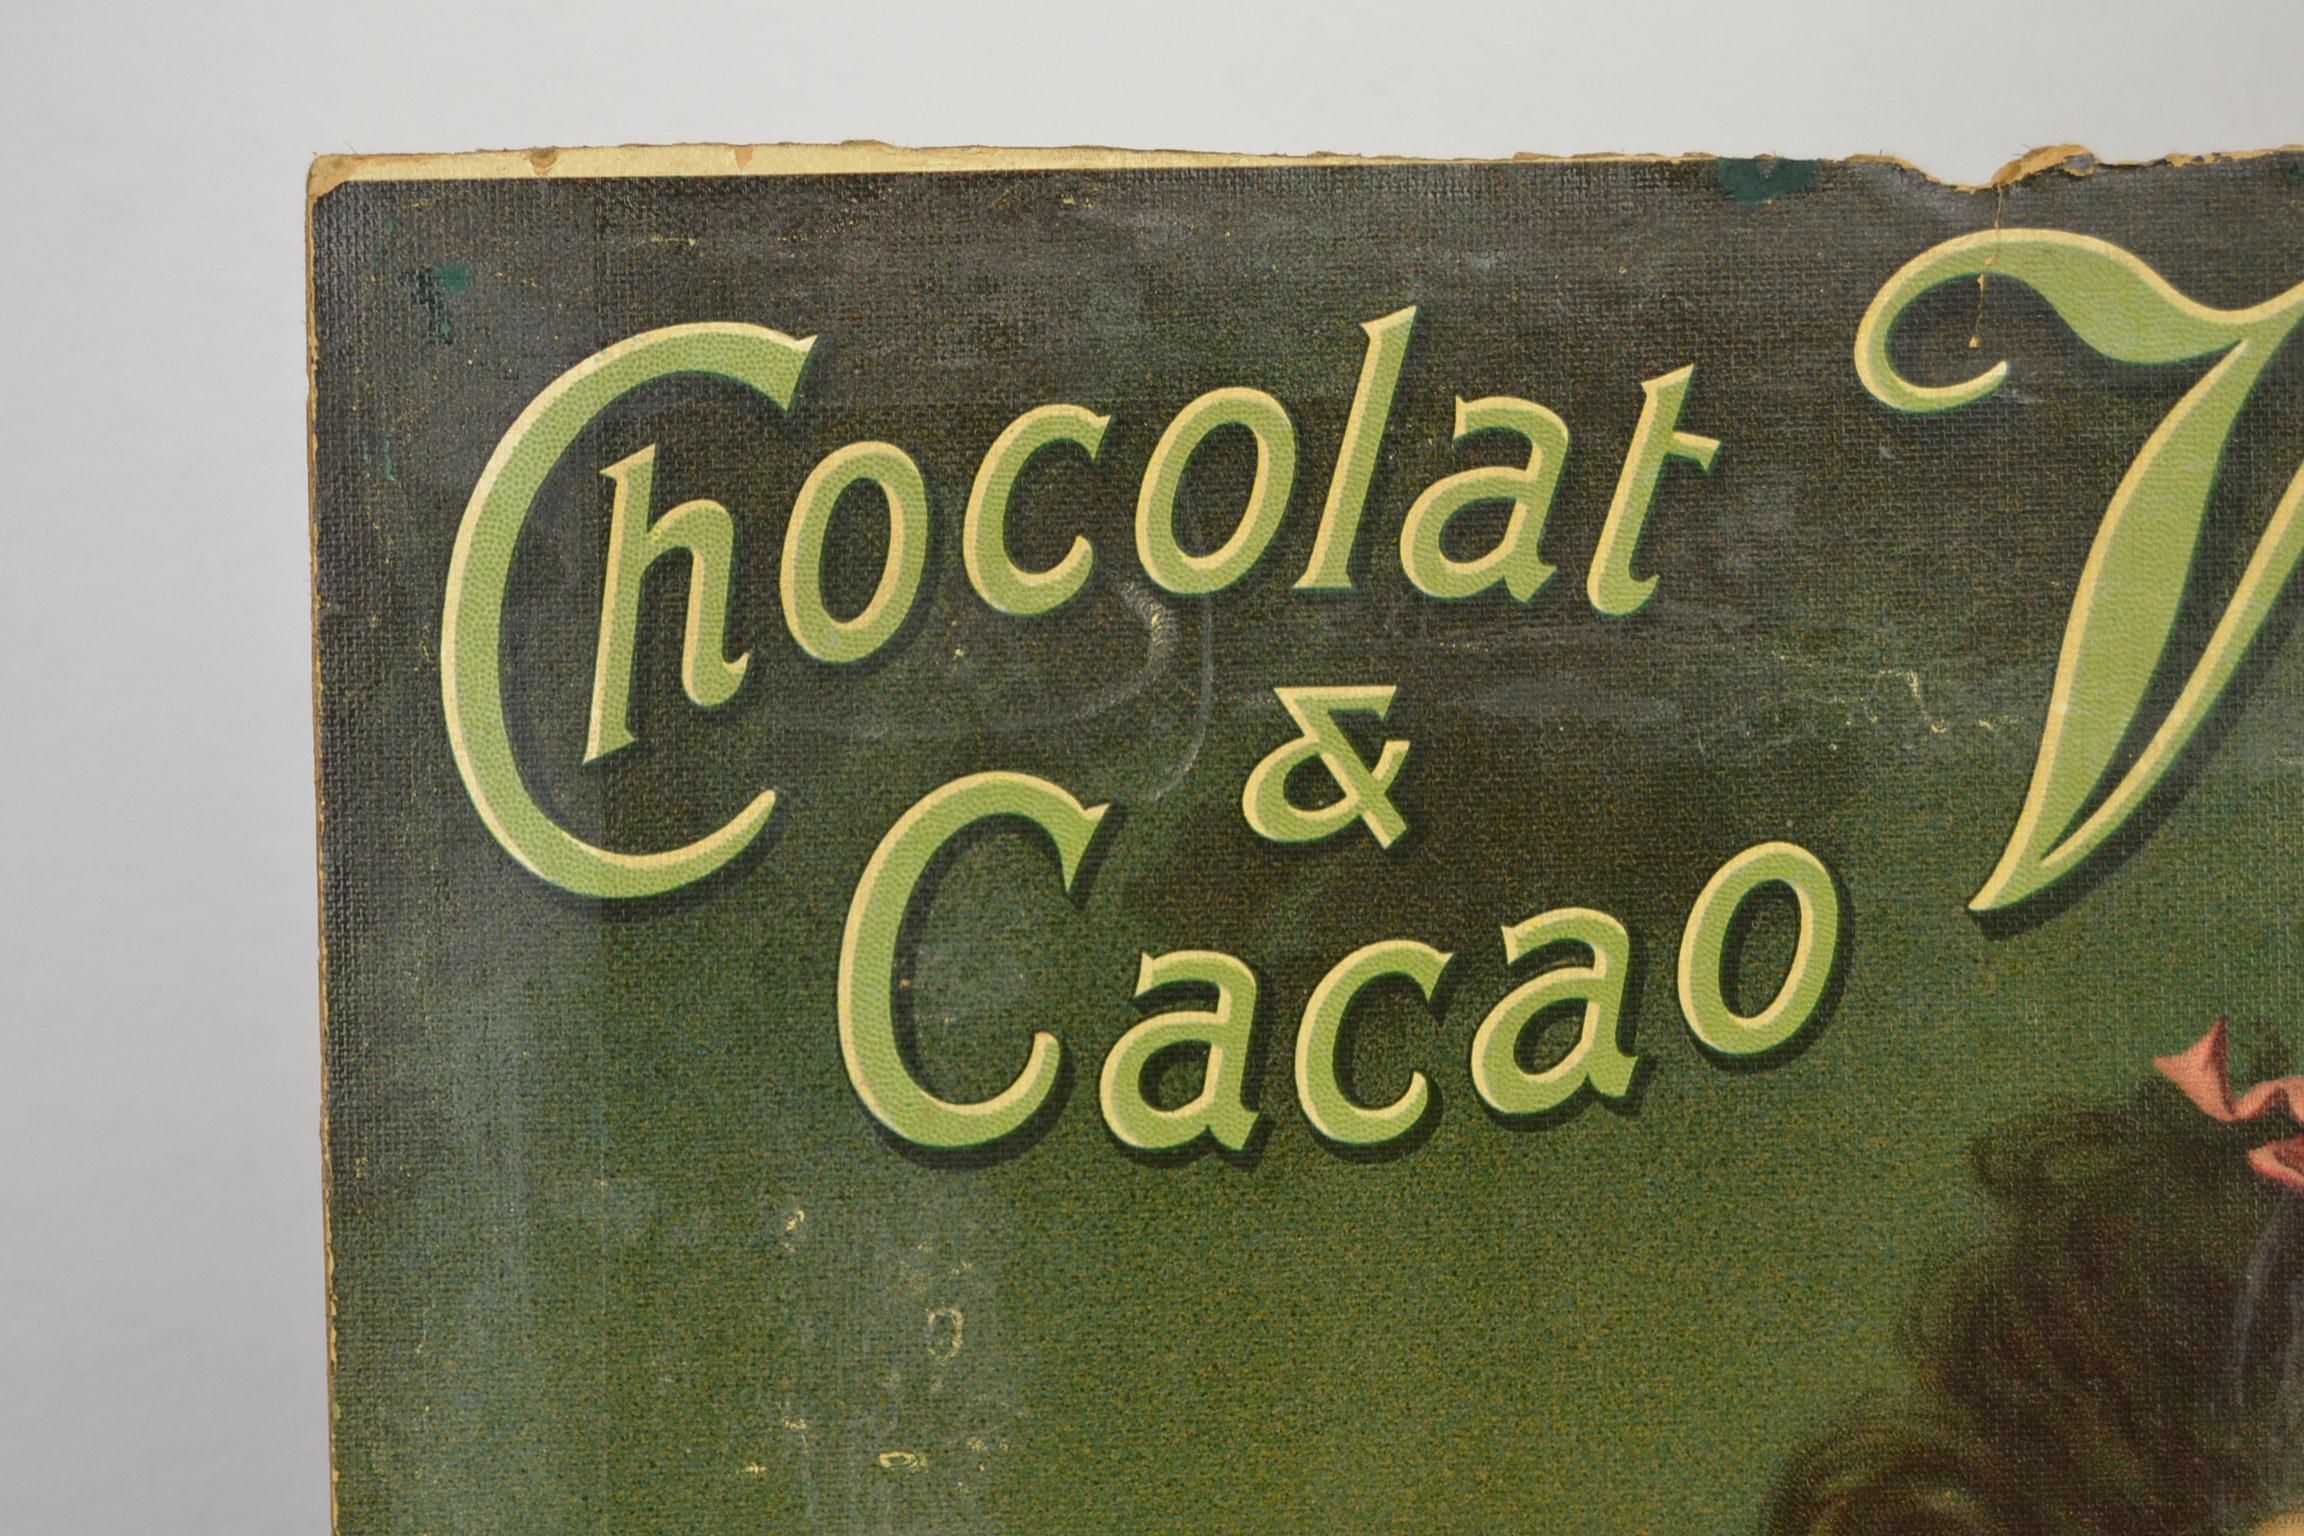 Art Nouveau Antique Chromo Advertising Sign for Victoria Chocolate and Cacao, Belgium